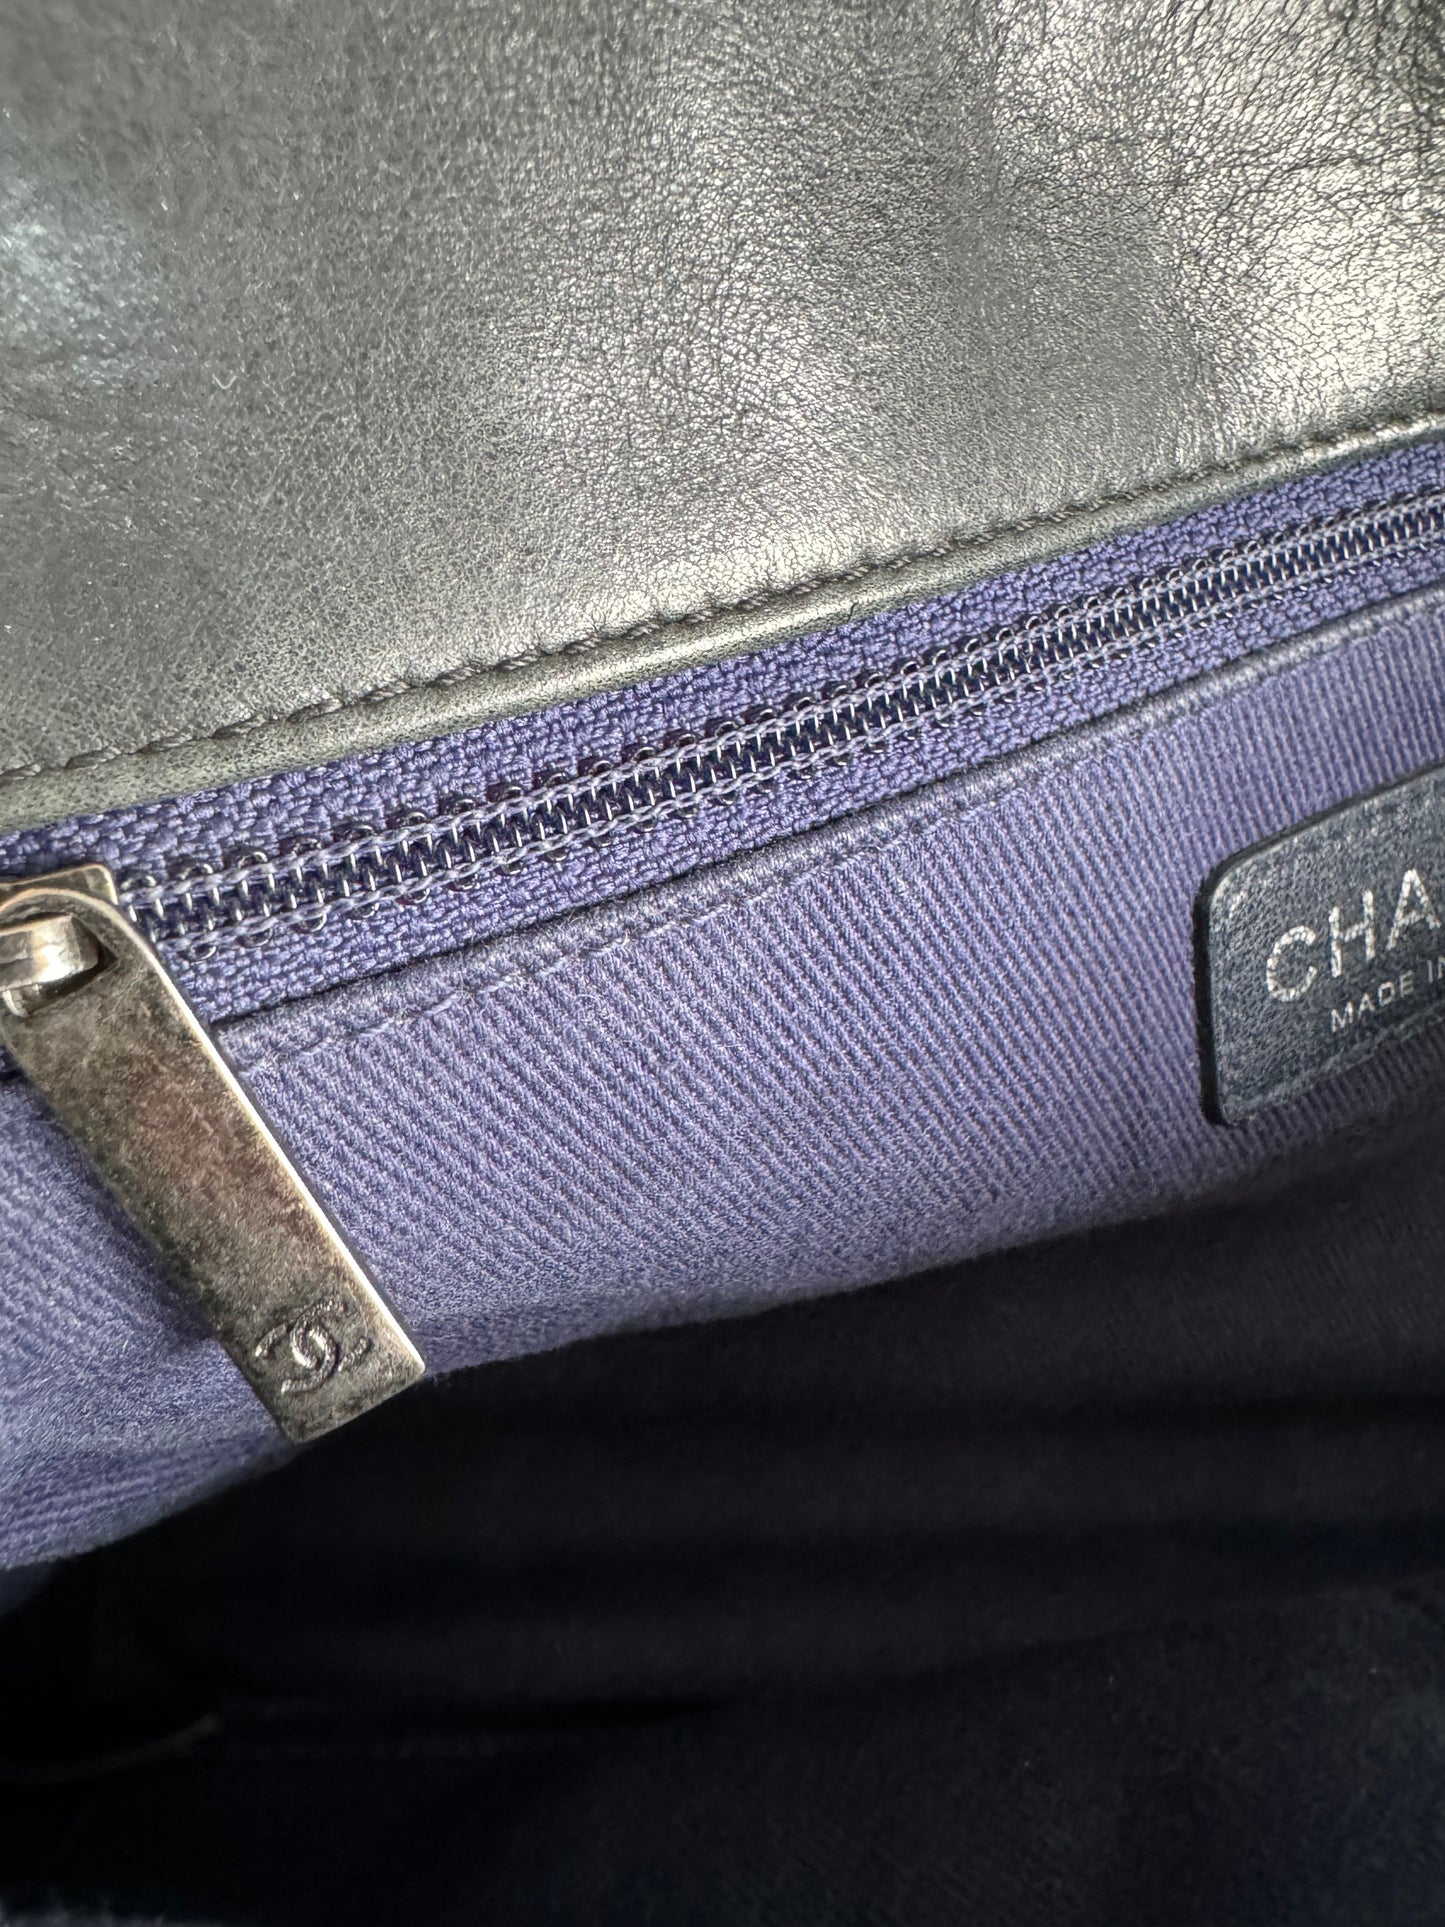 Chanel Iridescent Cc Bubble Flap Shoulder Bag - Black